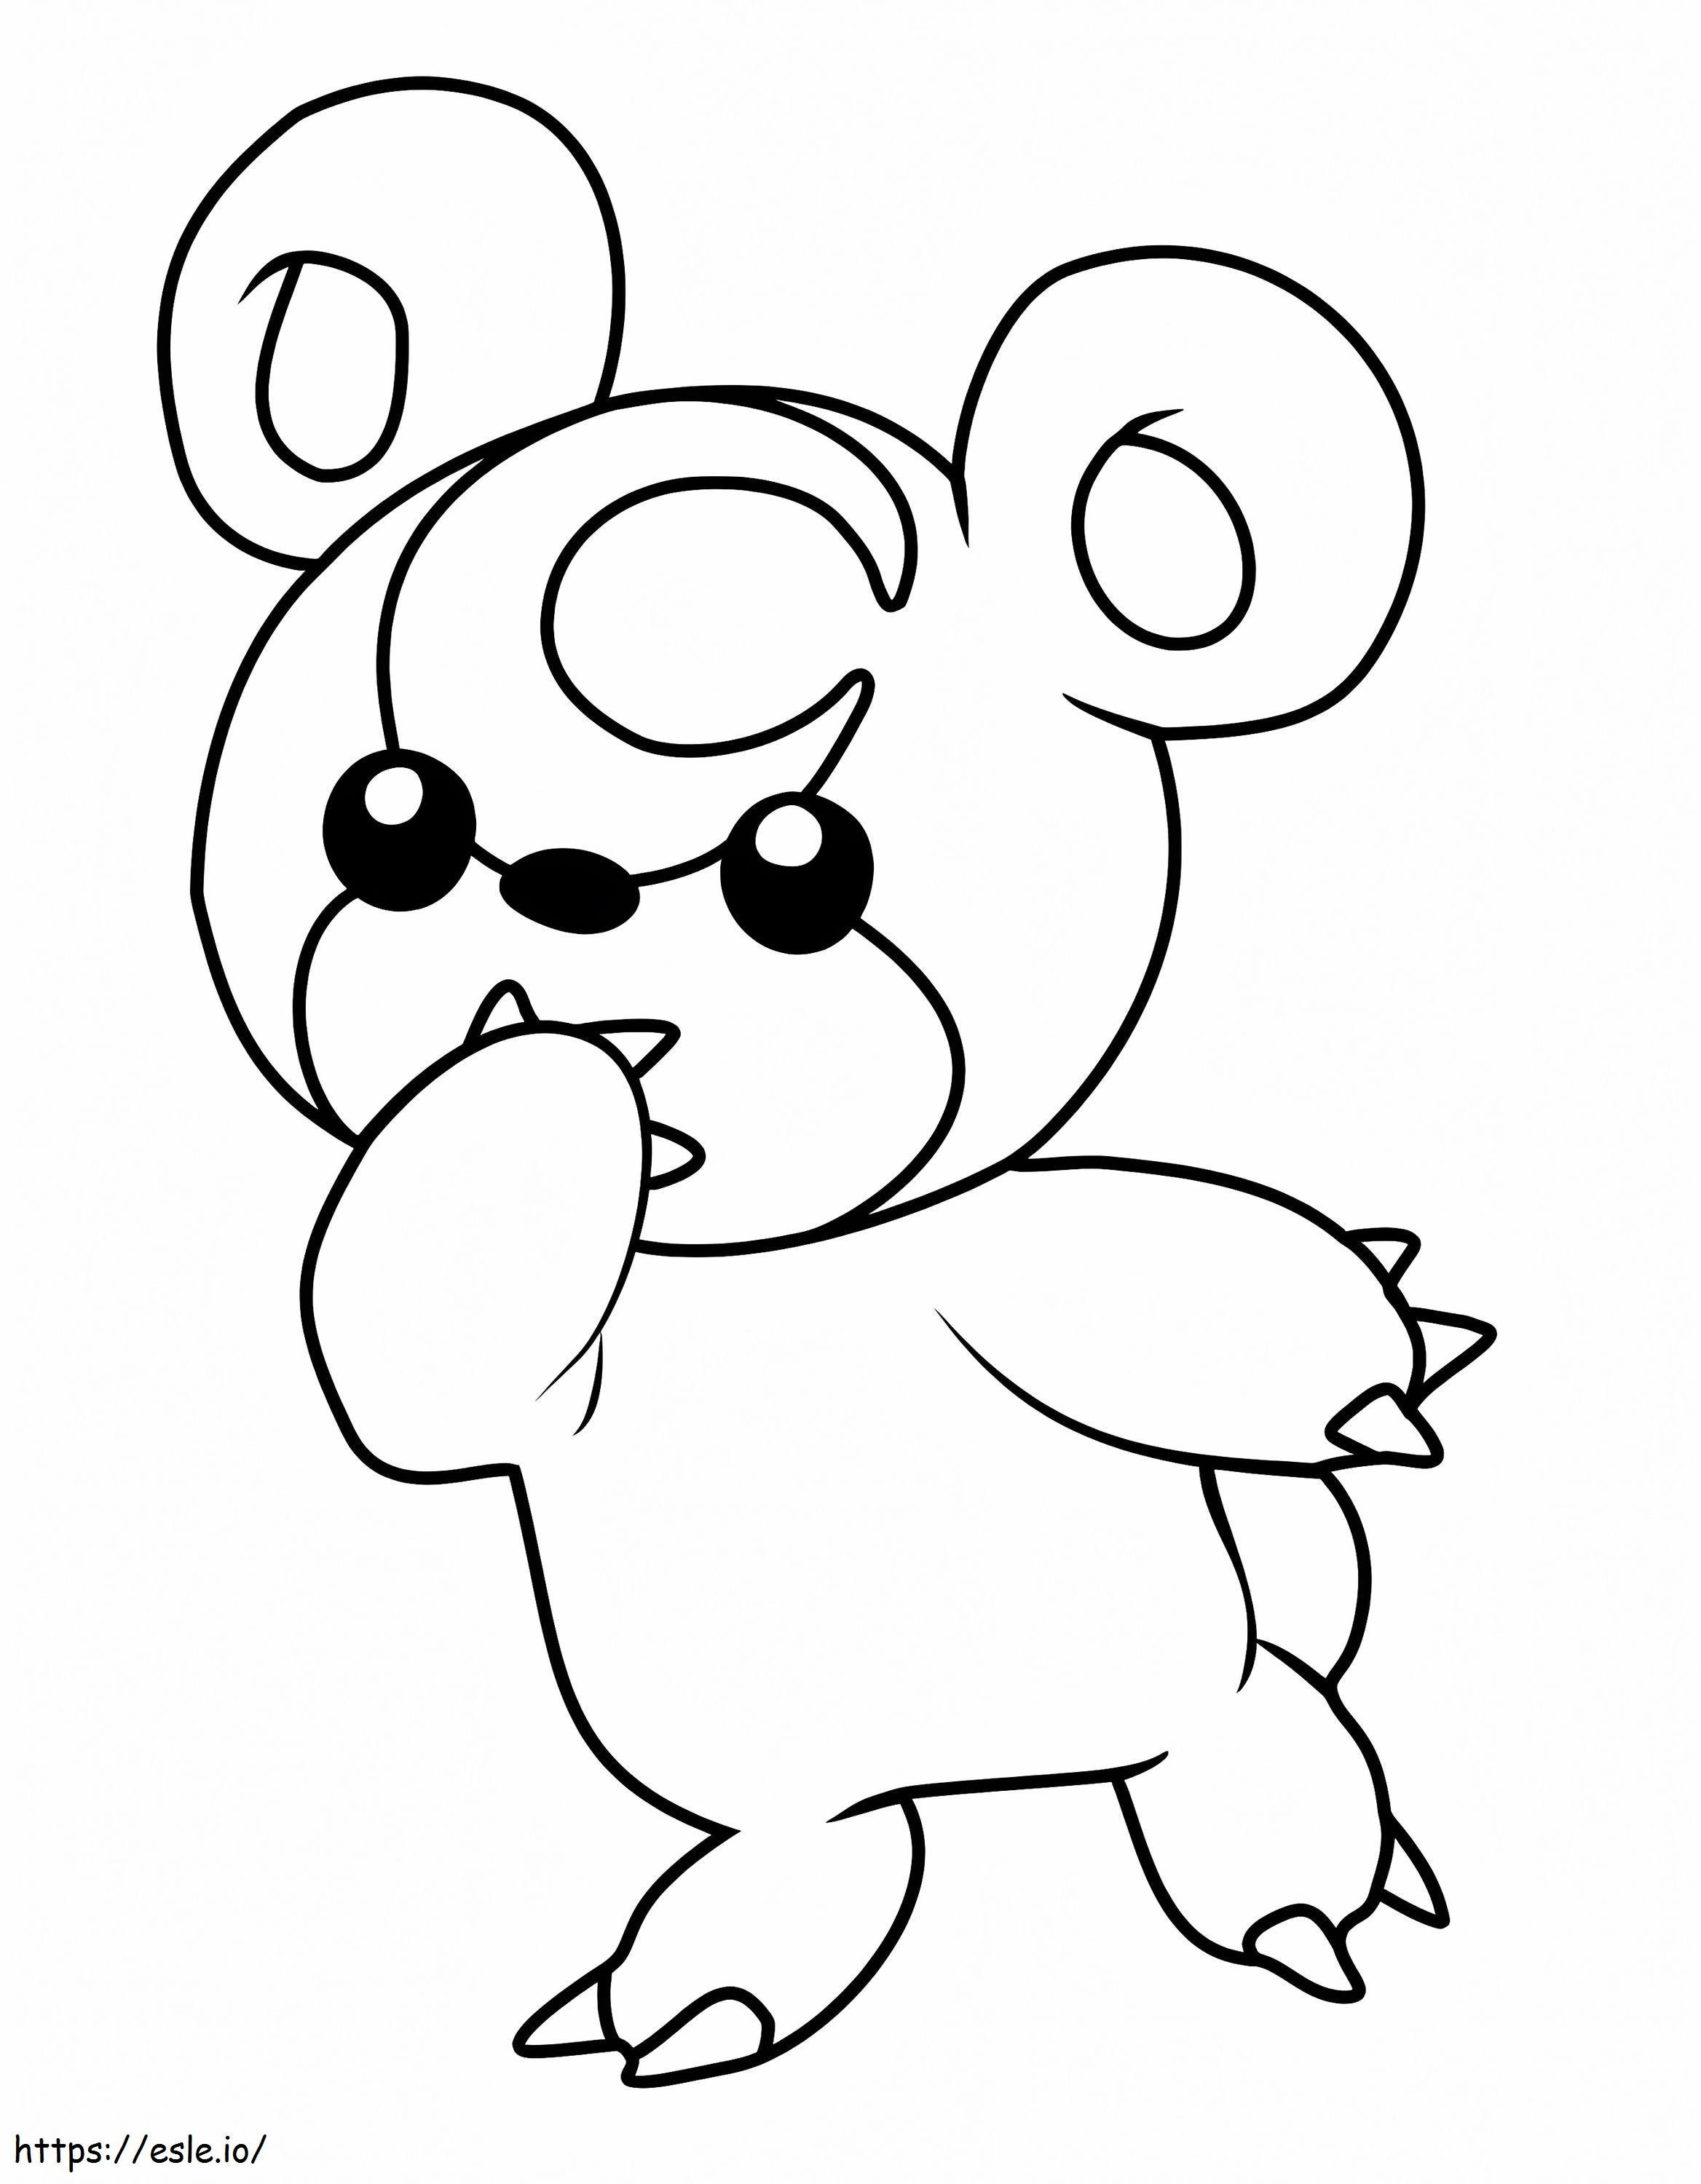 Teddybär-Pokémon ausmalbilder